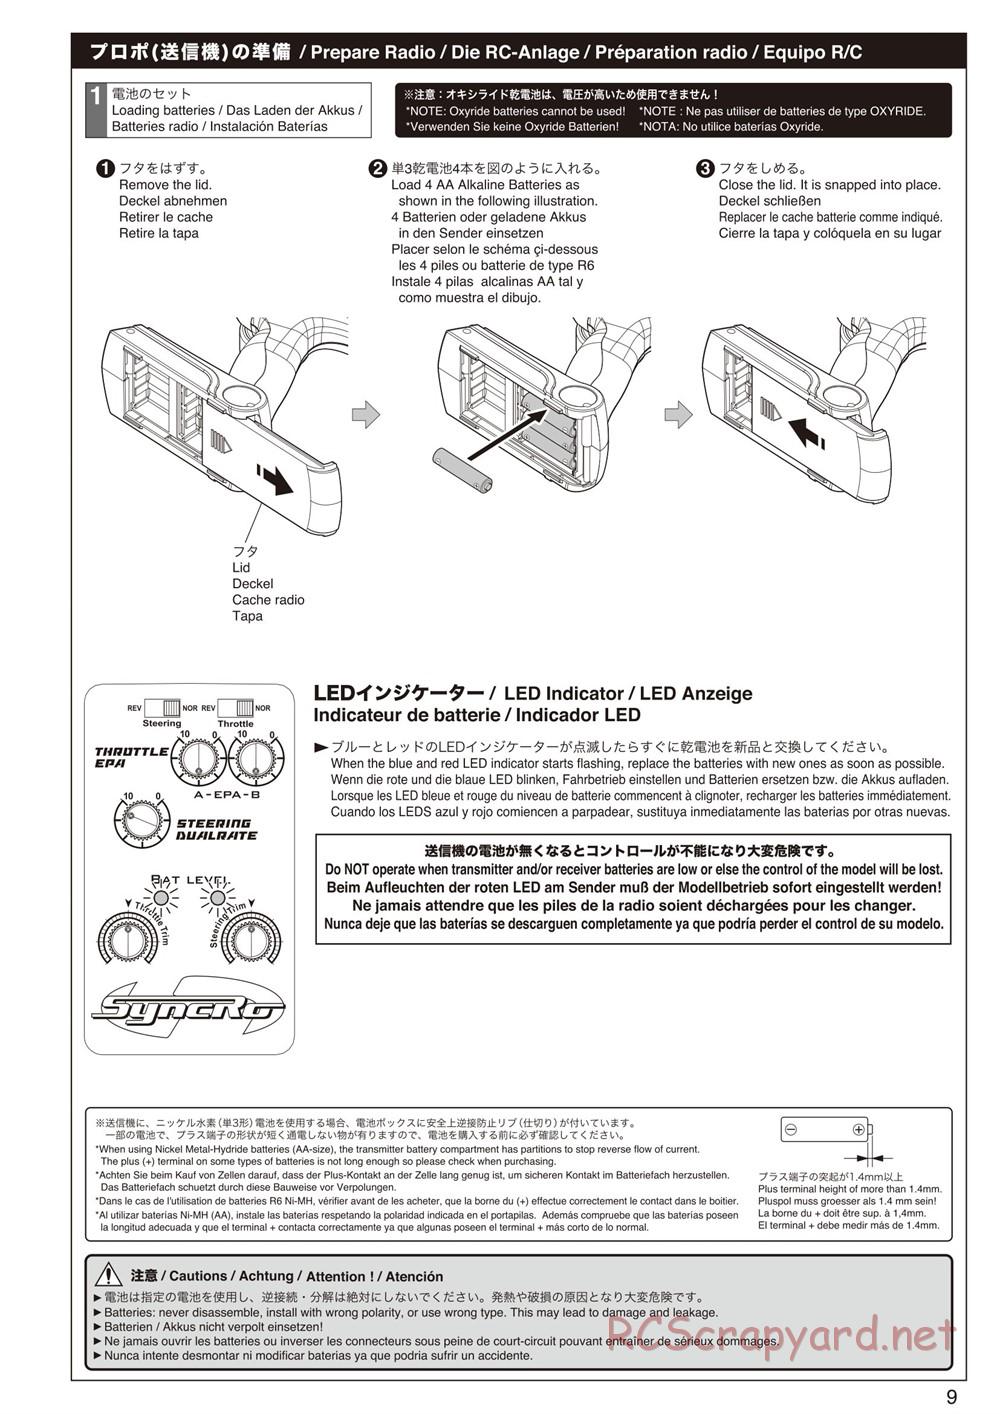 Kyosho - FO-XX GP - Manual - Page 9